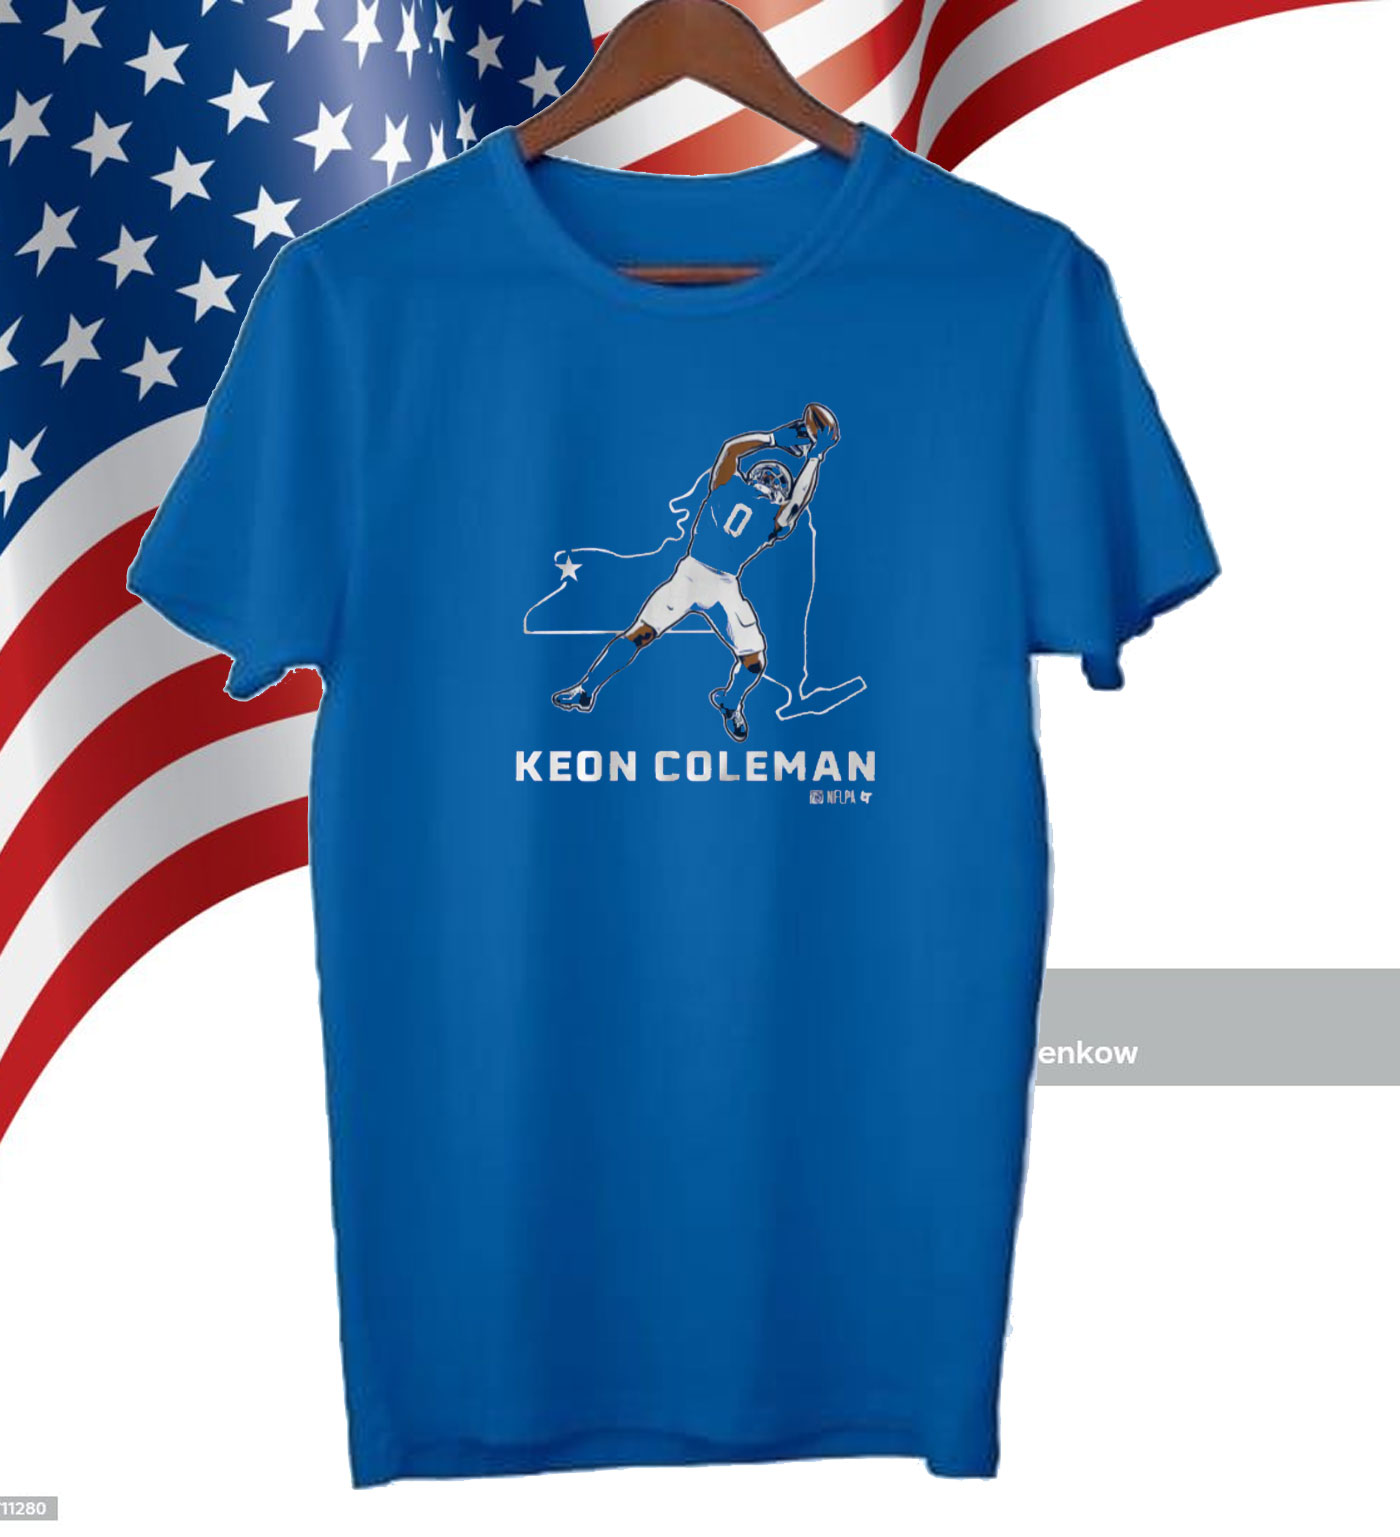 Keon Coleman: State Star shirt